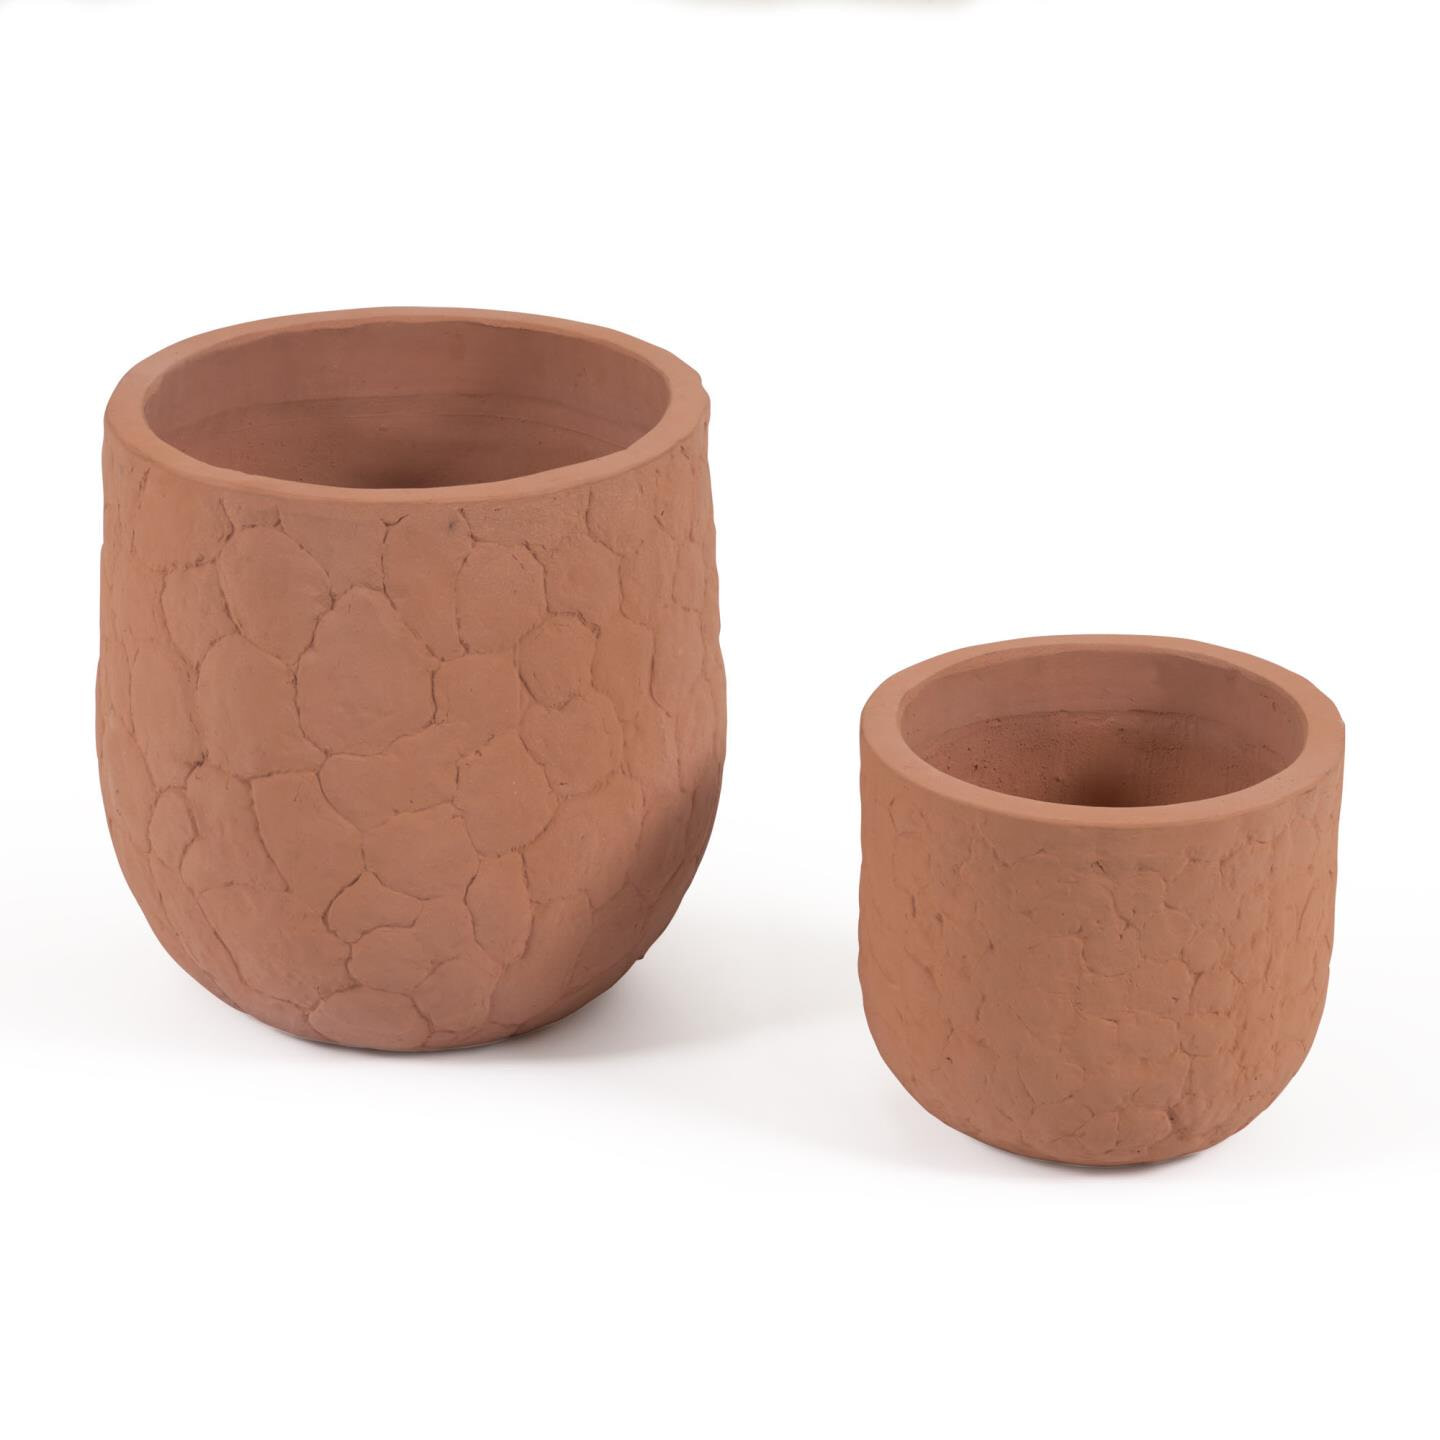 Kave Home Pot Simi Set van 2 stuks, Terracotta - Roestbruin